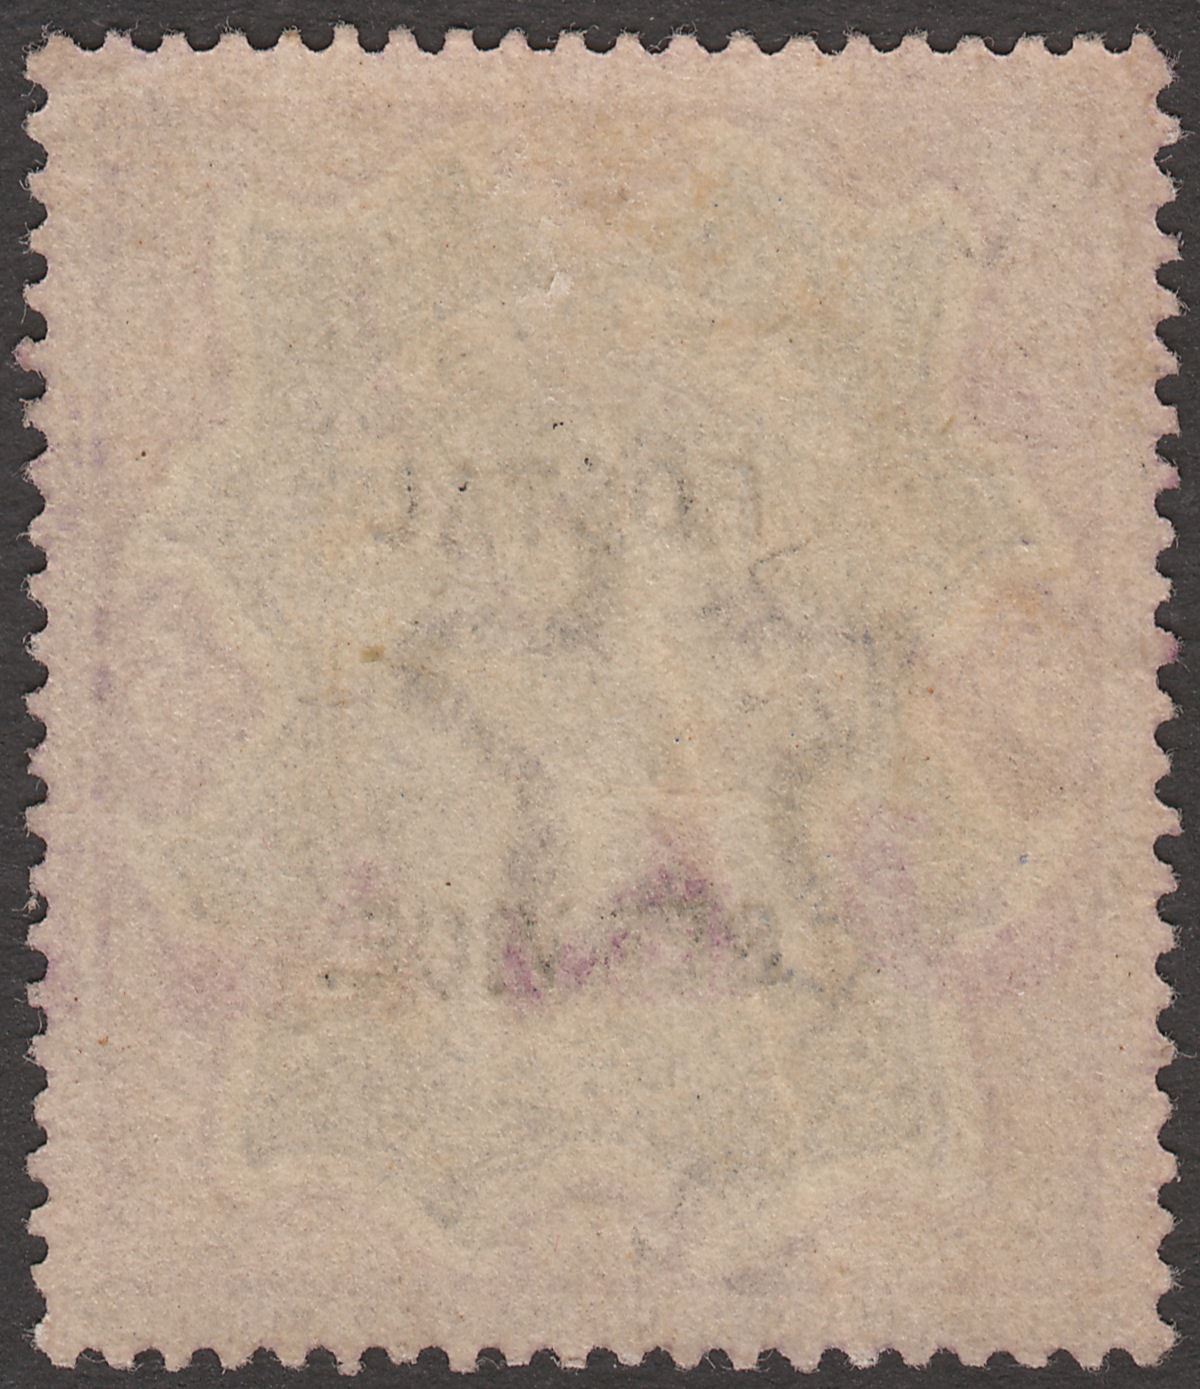 India 1895 QV Revenue Postal Service Overprint 5r Ultramarine and Violet Used